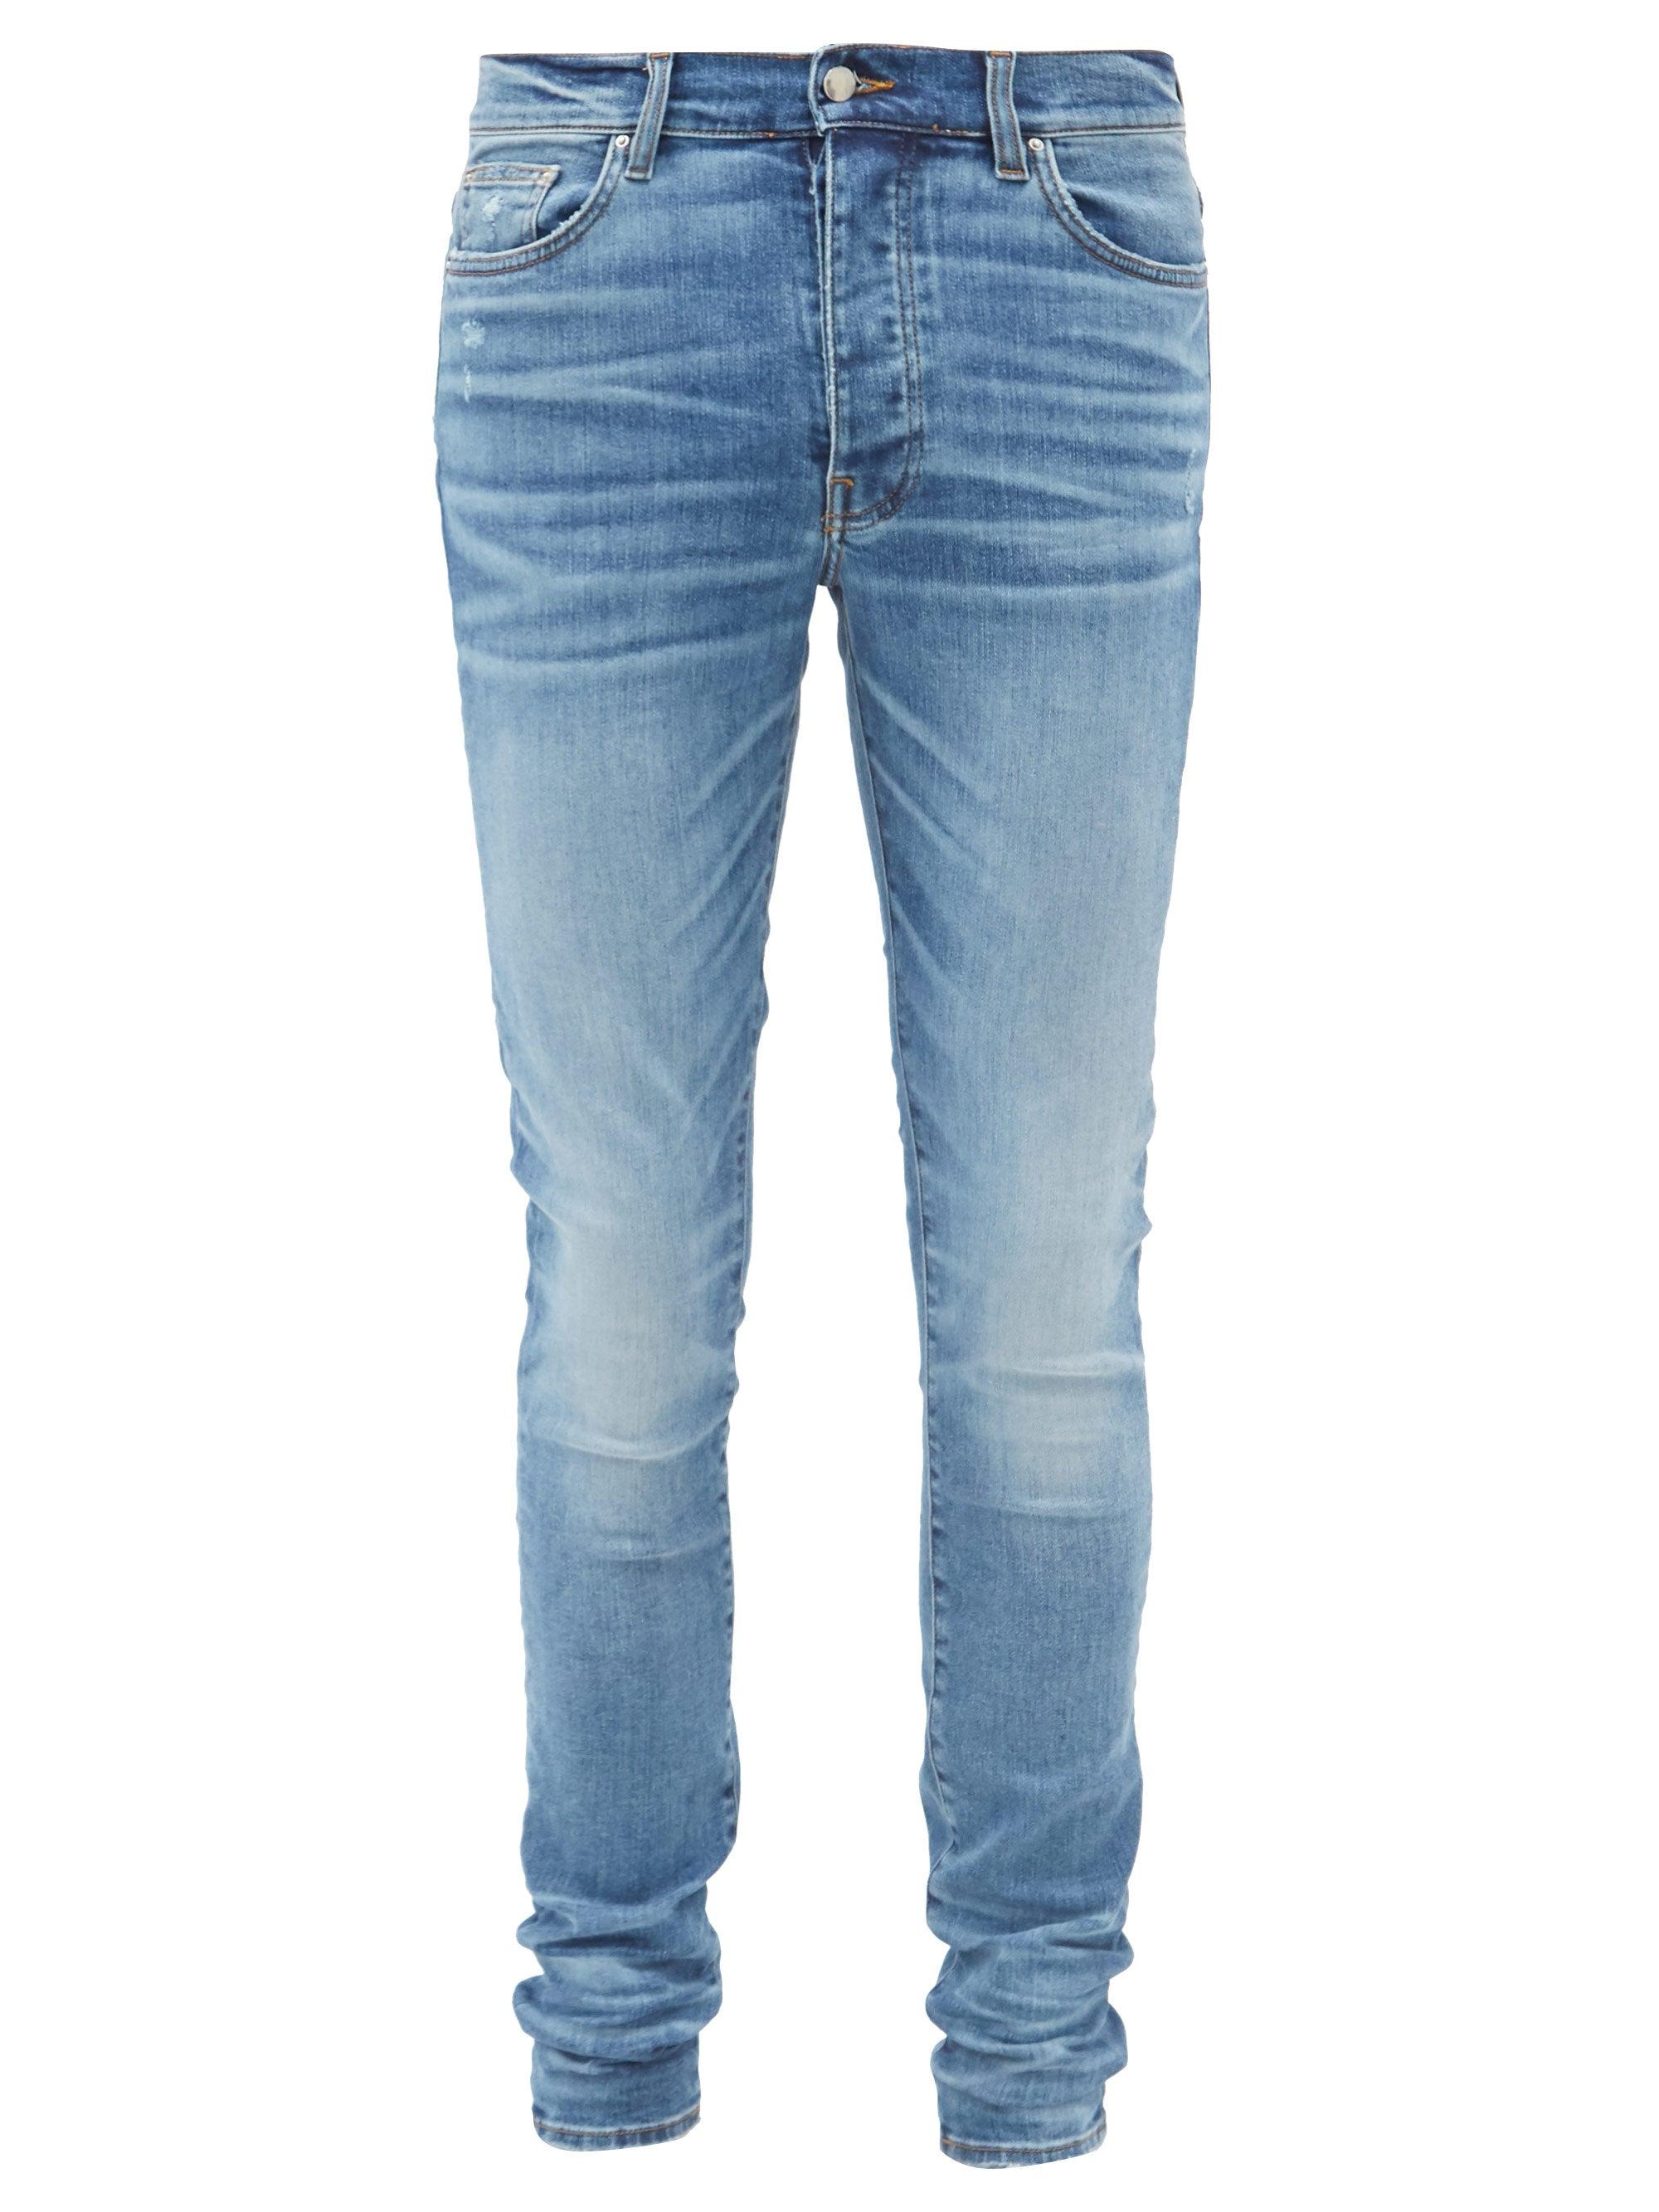 Amiri Denim Stack Distressed Skinny-leg Jeans in Blue for Men - Lyst